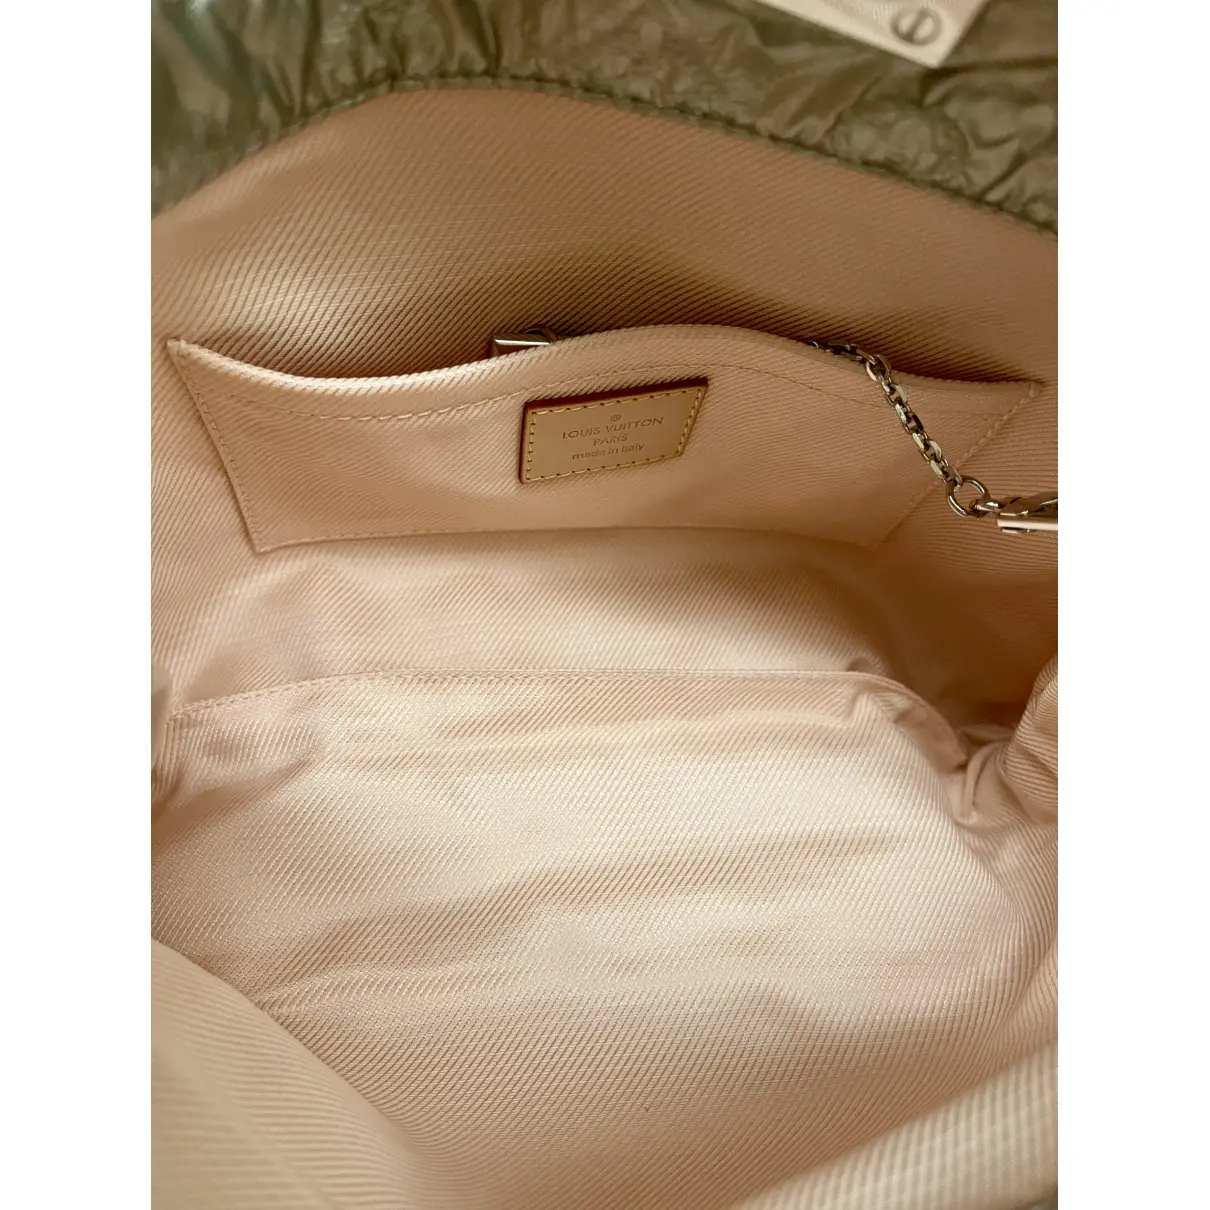 Buy Louis Vuitton Altair clutch bag online